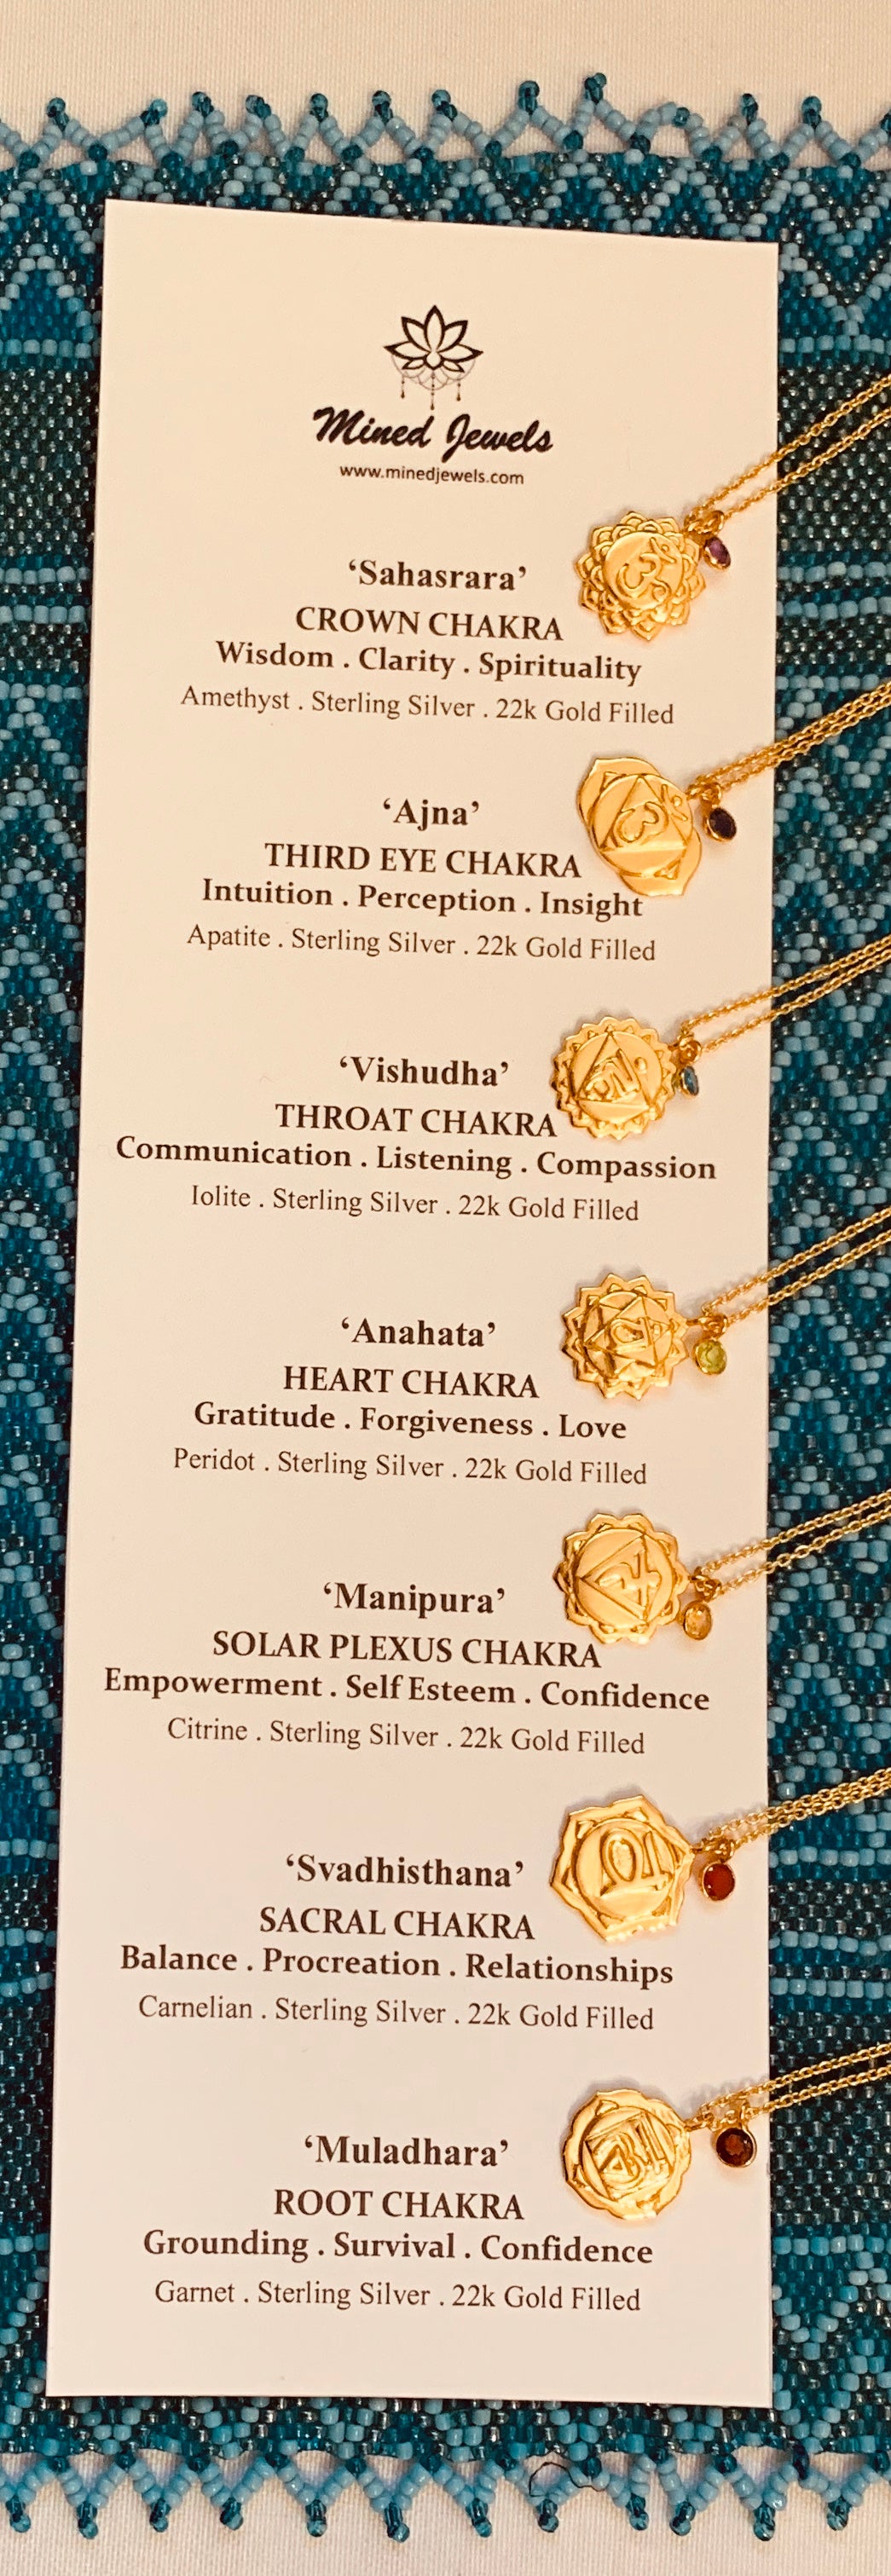 Throat Chakra, Vishudha- Apatite Charm (Communication:Listening:Compassion) Sterling Silver Gold vermeil